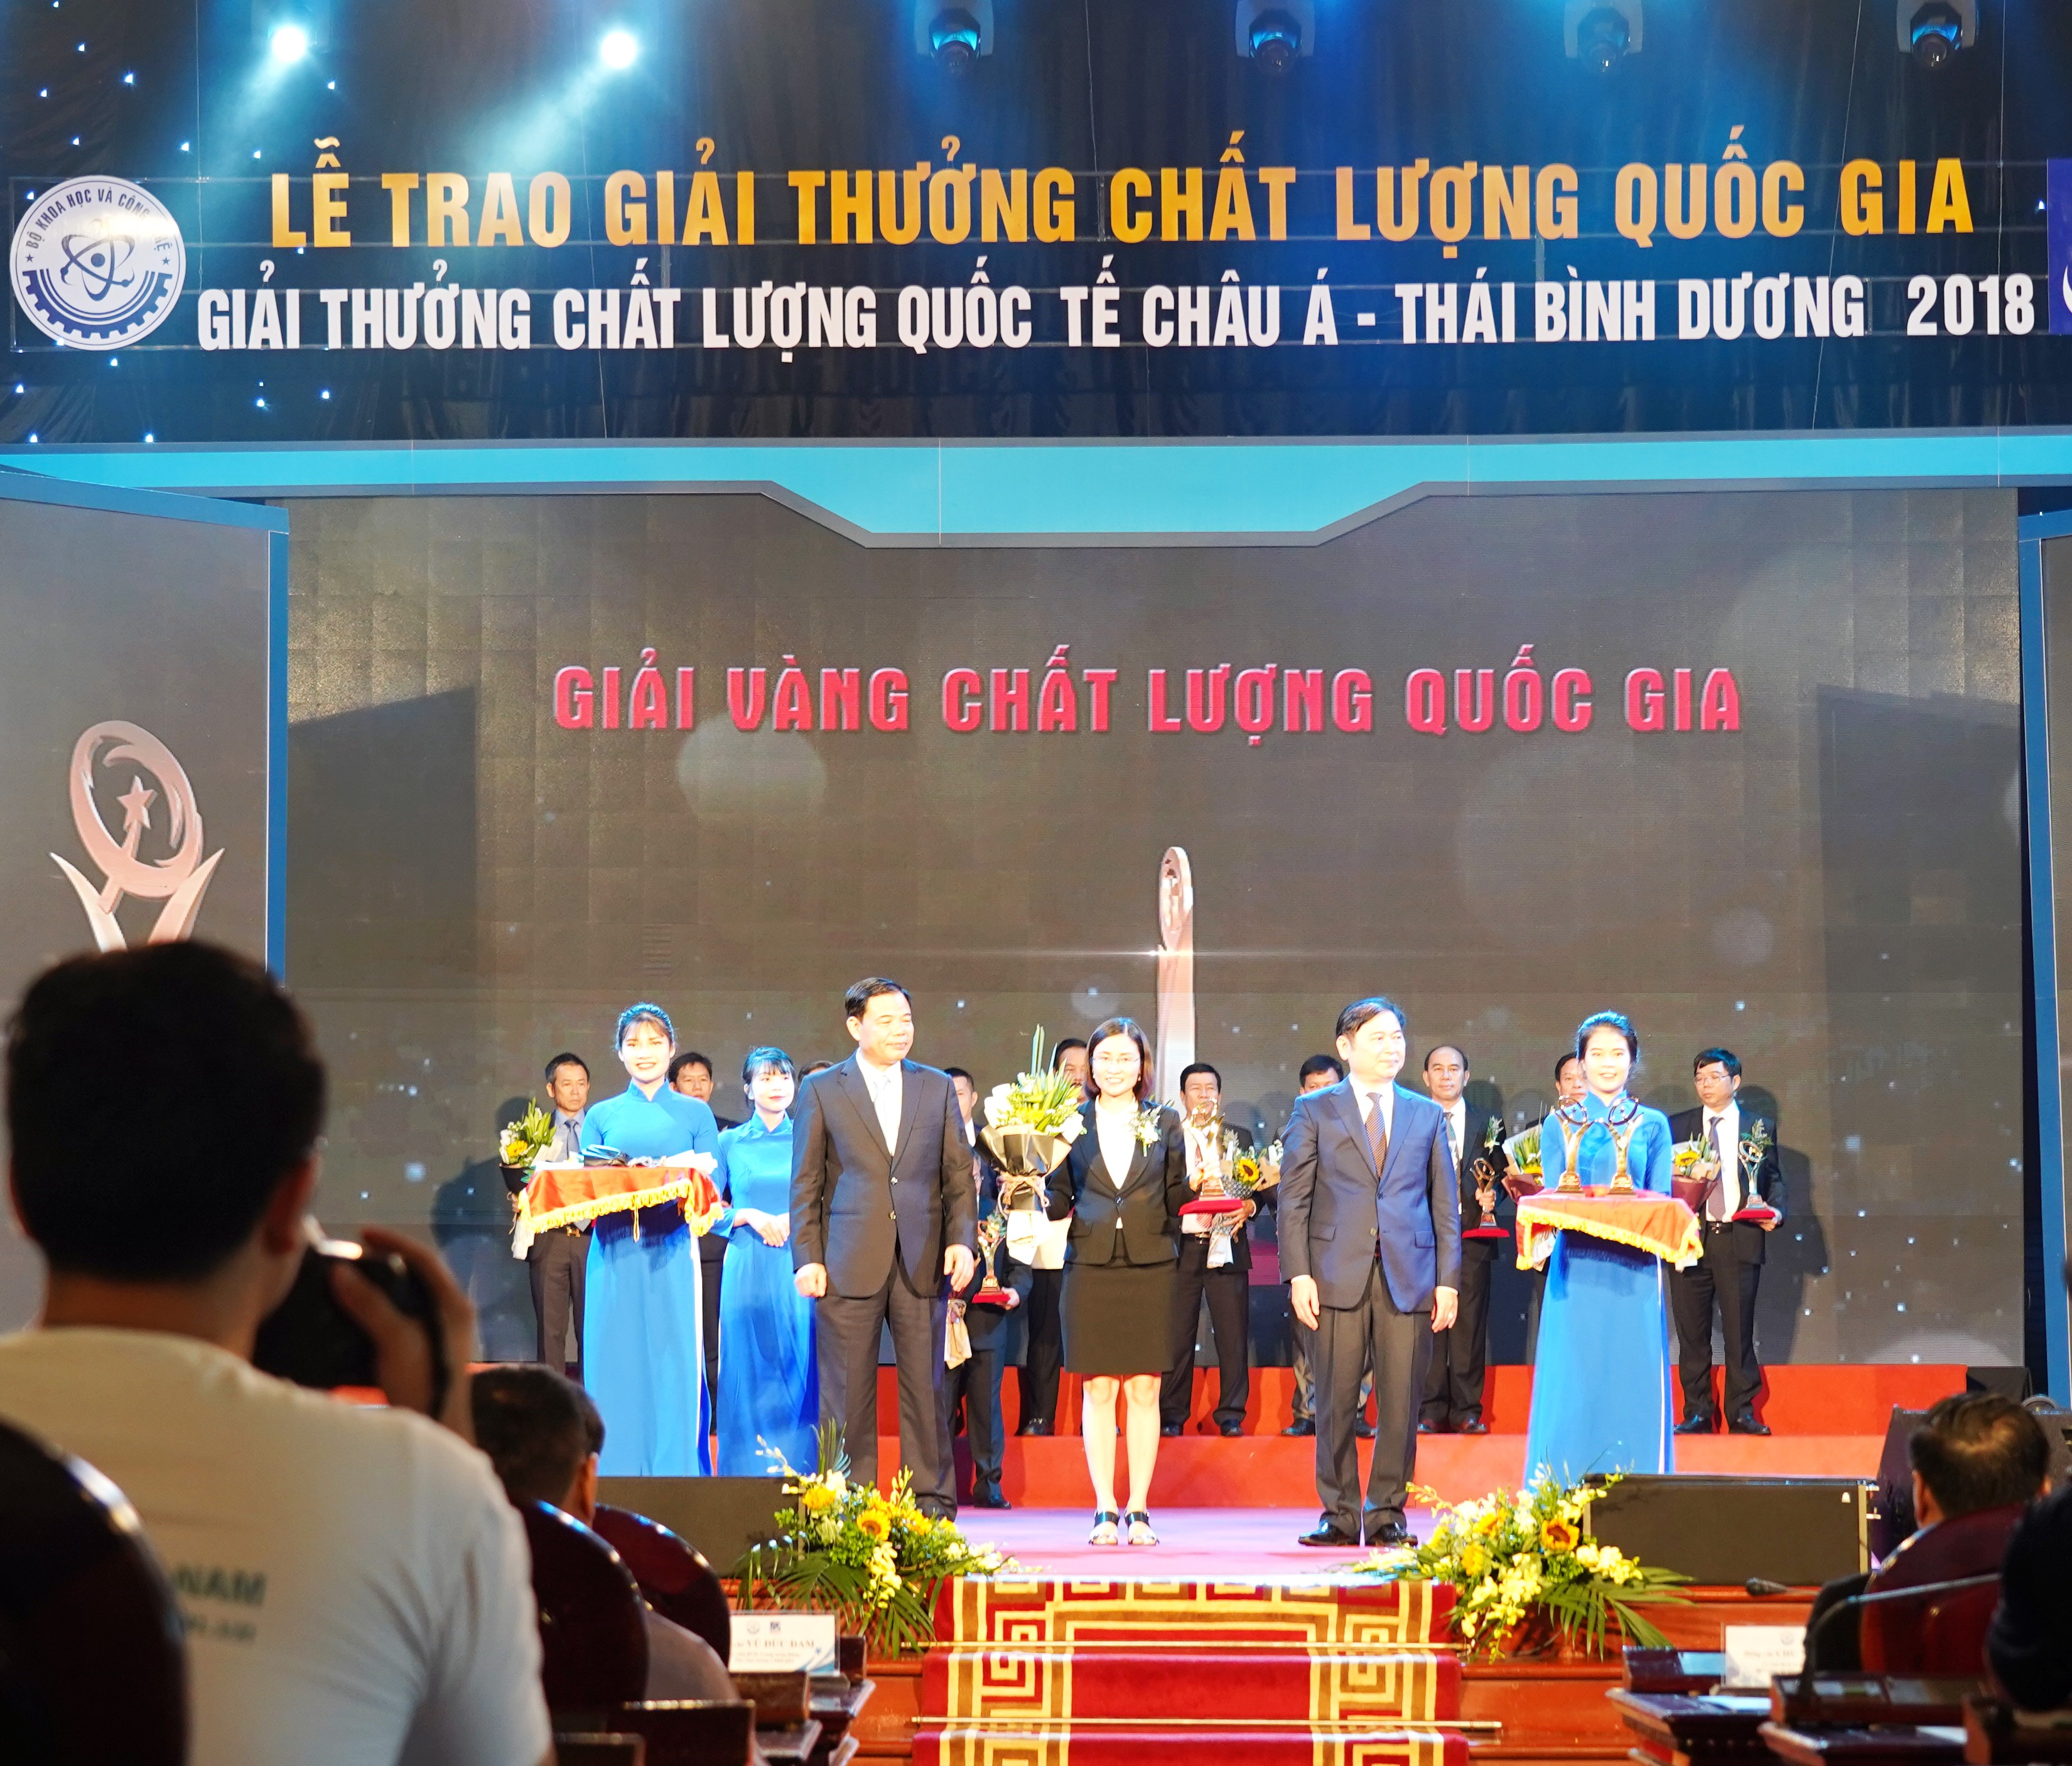 Ms. Tran Thi Thoan – Permanent Deputy General Director of An Phat Bioplastics received the award.